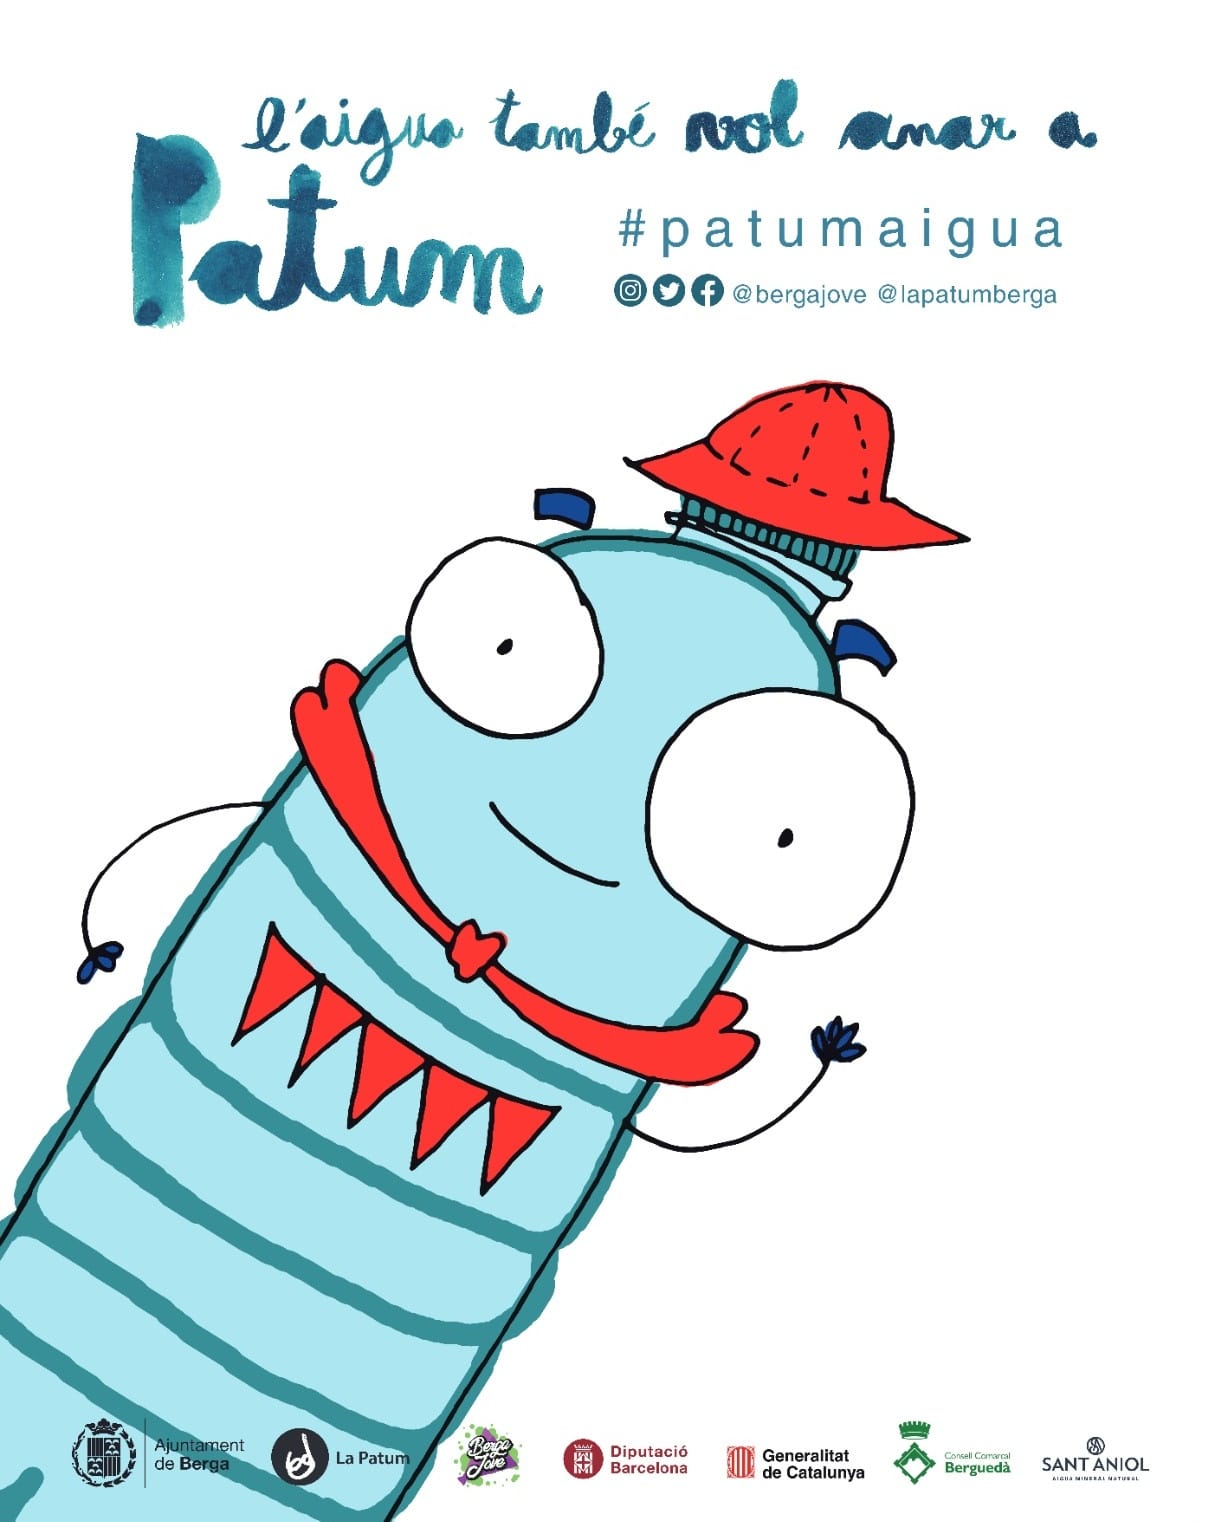 Campanya de la Patumaigua